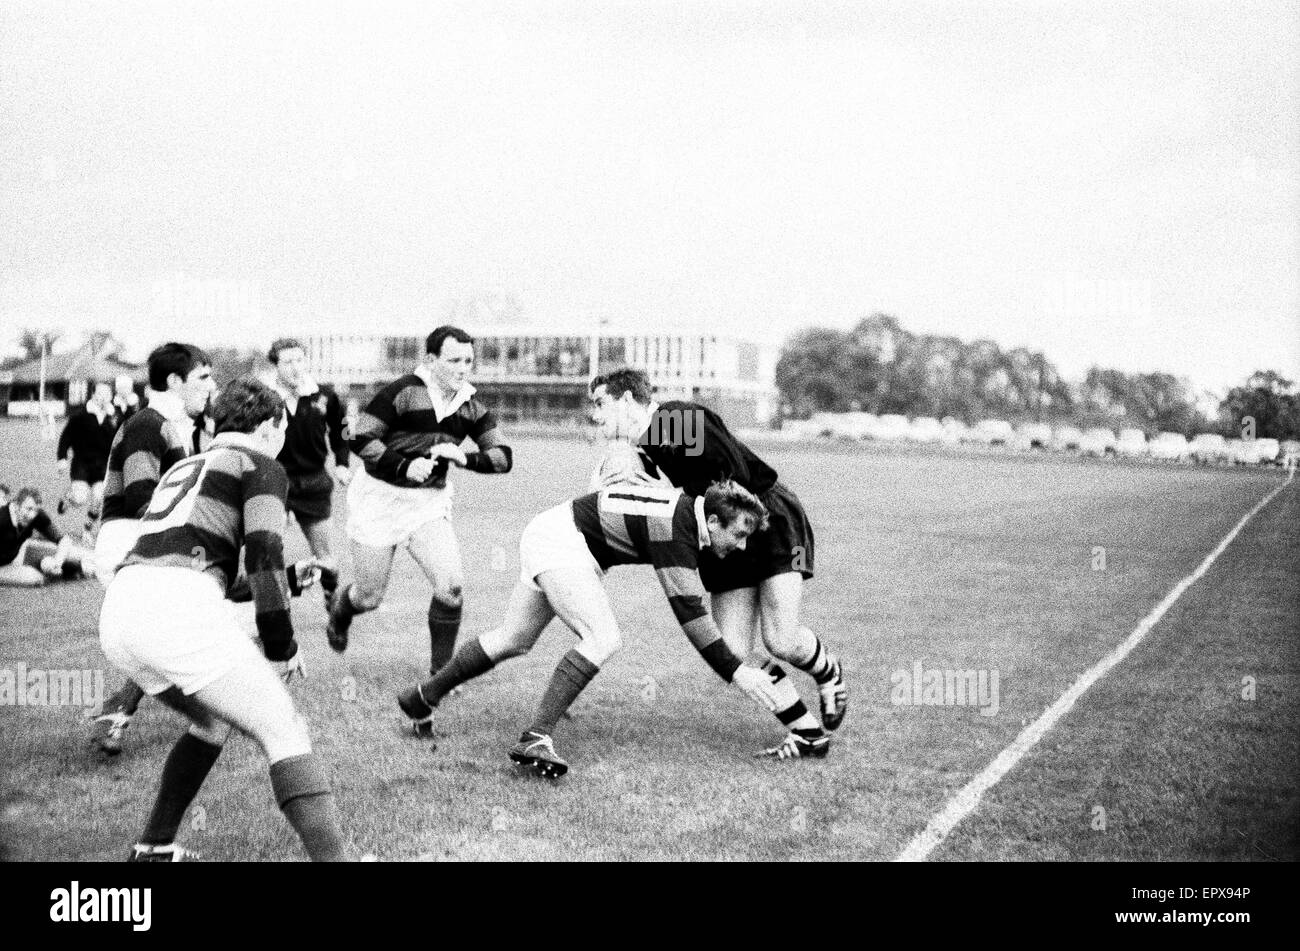 London Wasps v Aberavon, Rugby Union Match, ottobre 1965. Foto Stock